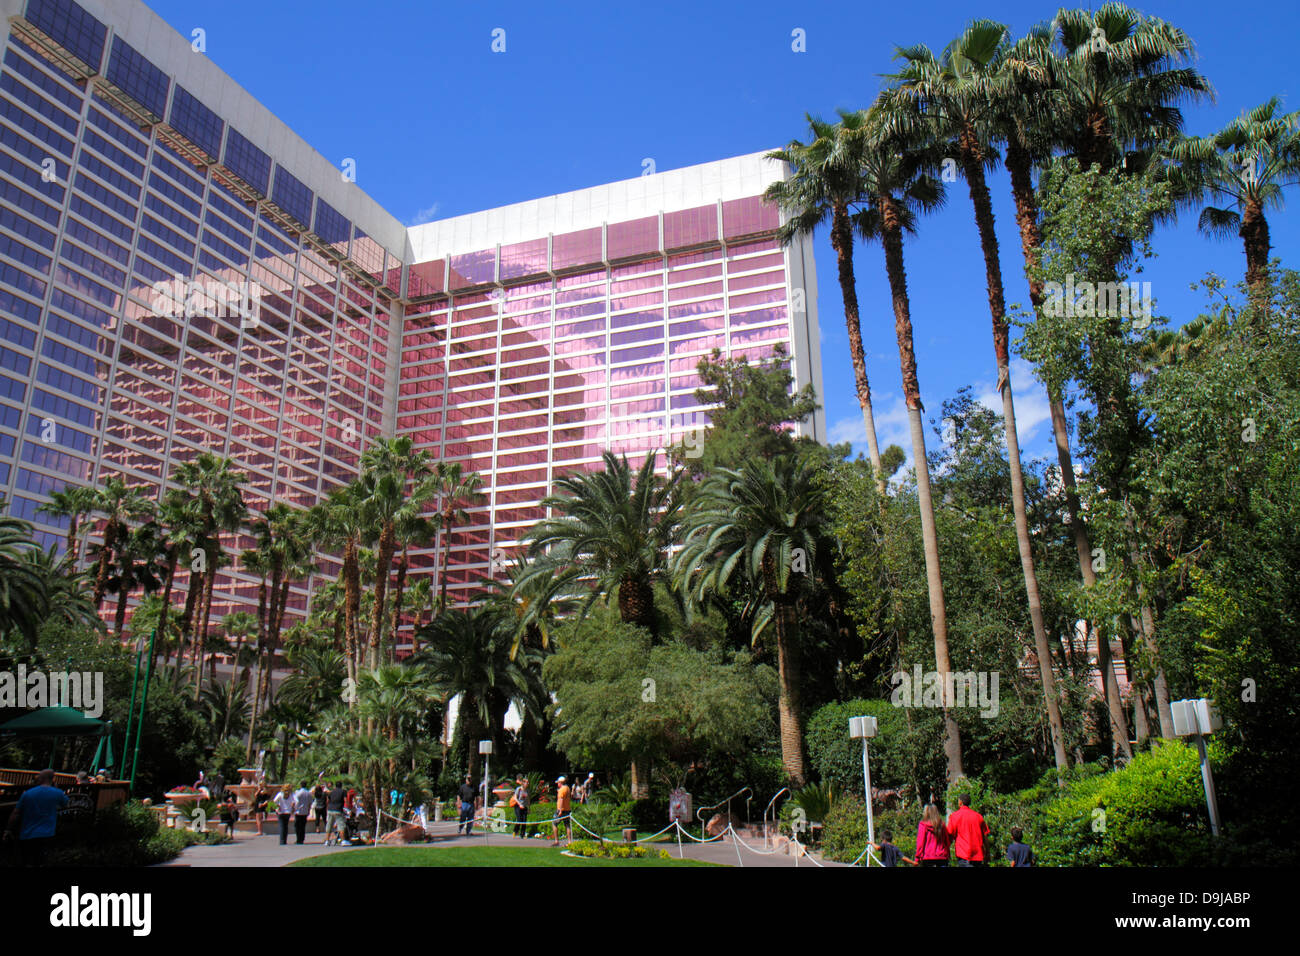 Las Vegas Nevada,The Strip,South Las Vegas Boulevard,Flamingo Las Vegas Hotel & Casino,garden,courtyard,NV130401025 Stock Photo